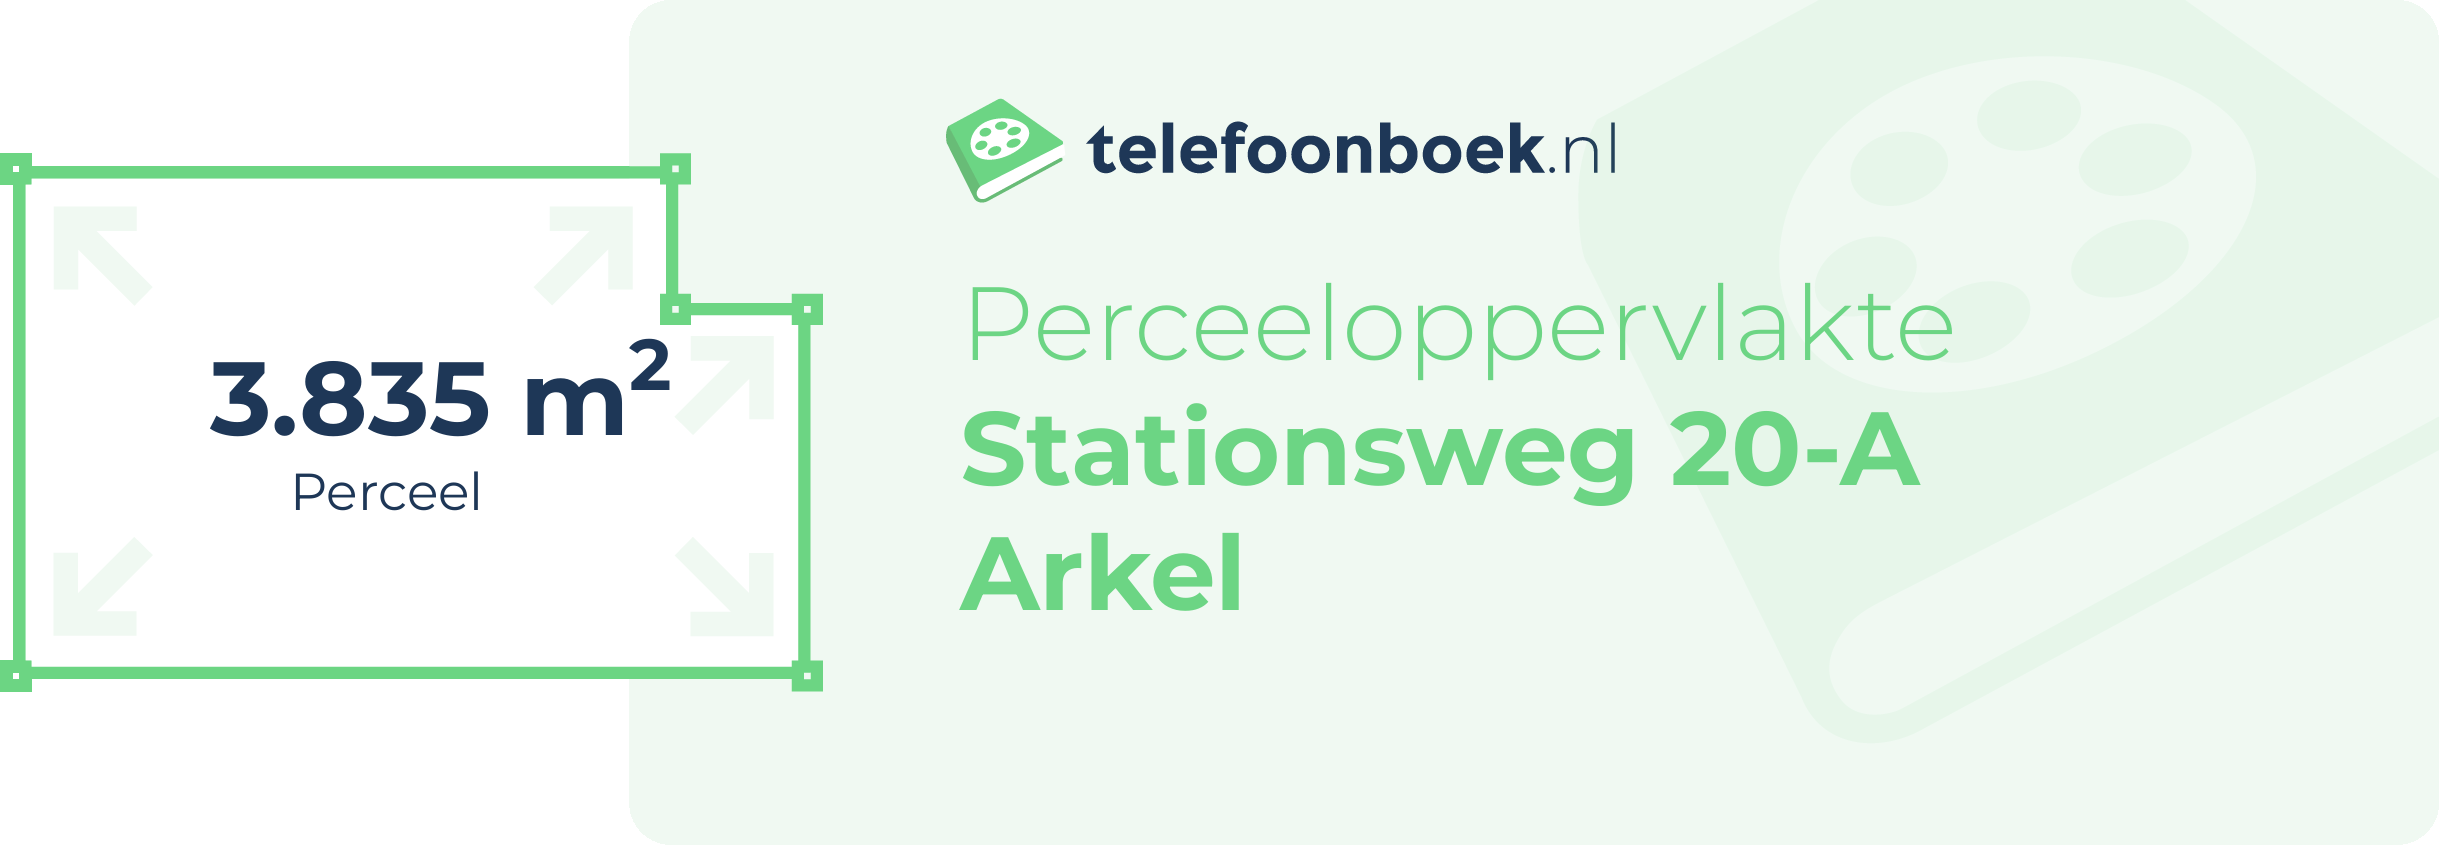 Perceeloppervlakte Stationsweg 20-A Arkel